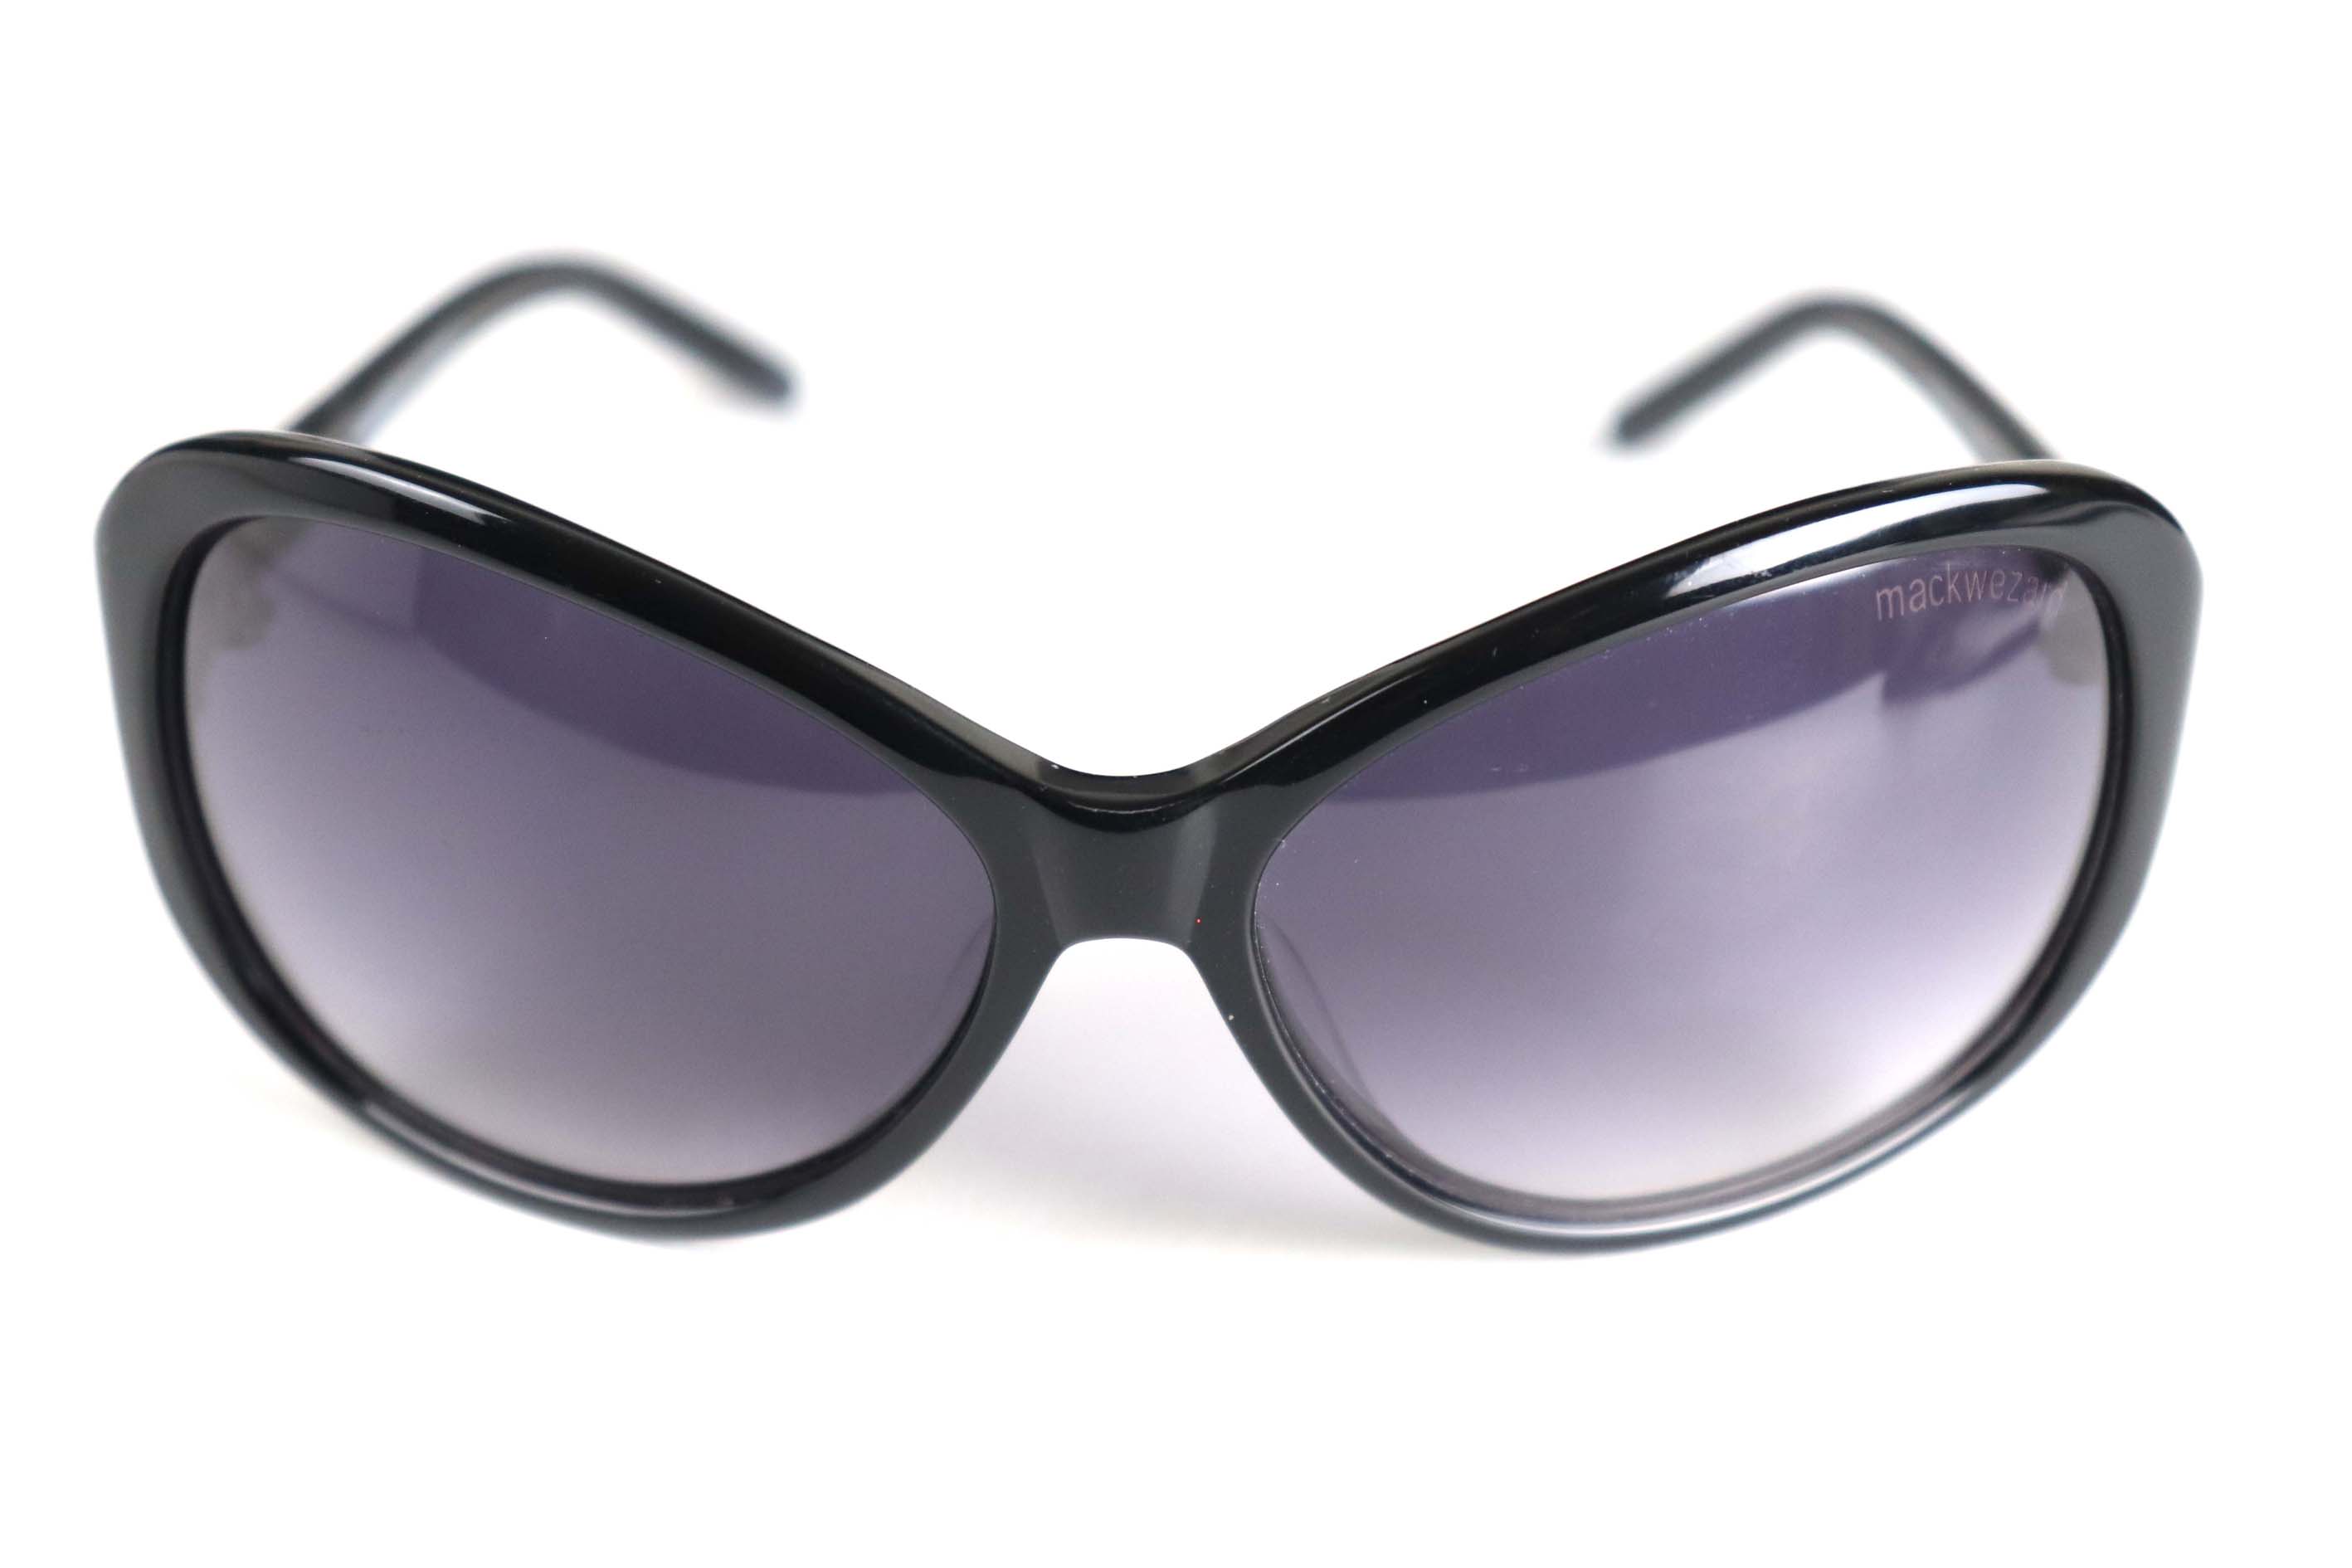 Mackwezard Sunglasses-BV81968-C1-56-16-138